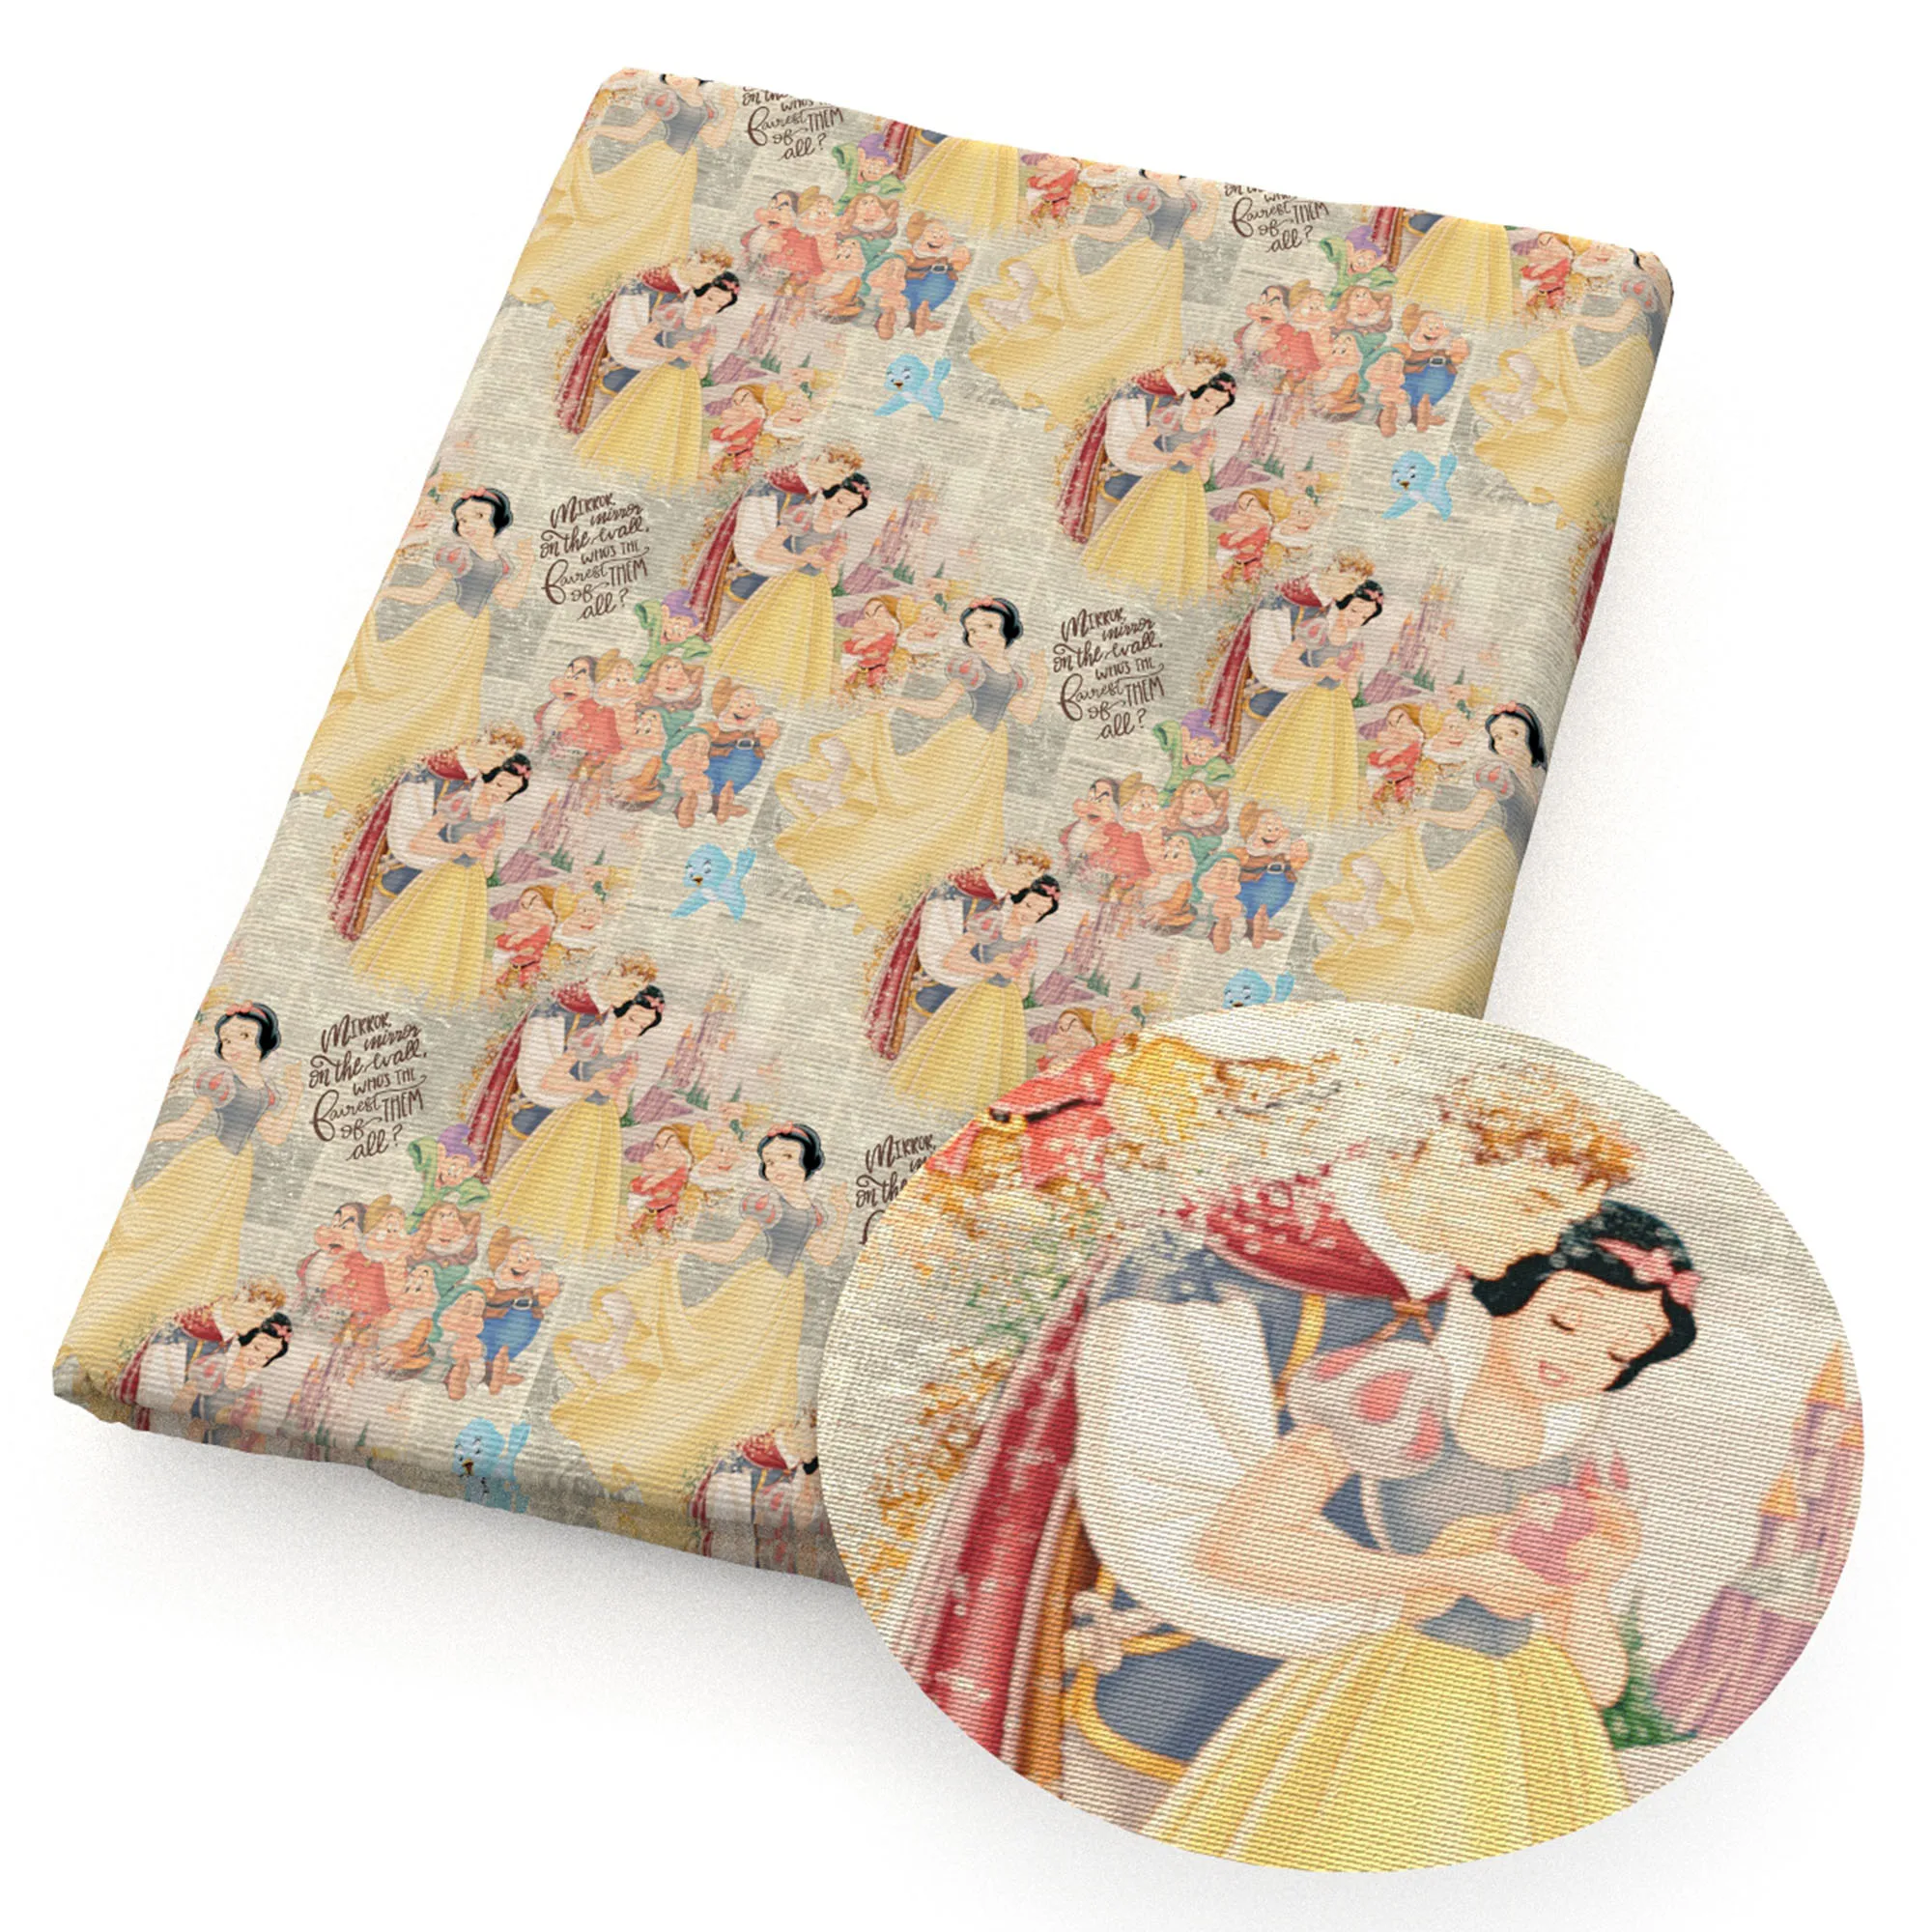 Disney Handmade Patch Quilts